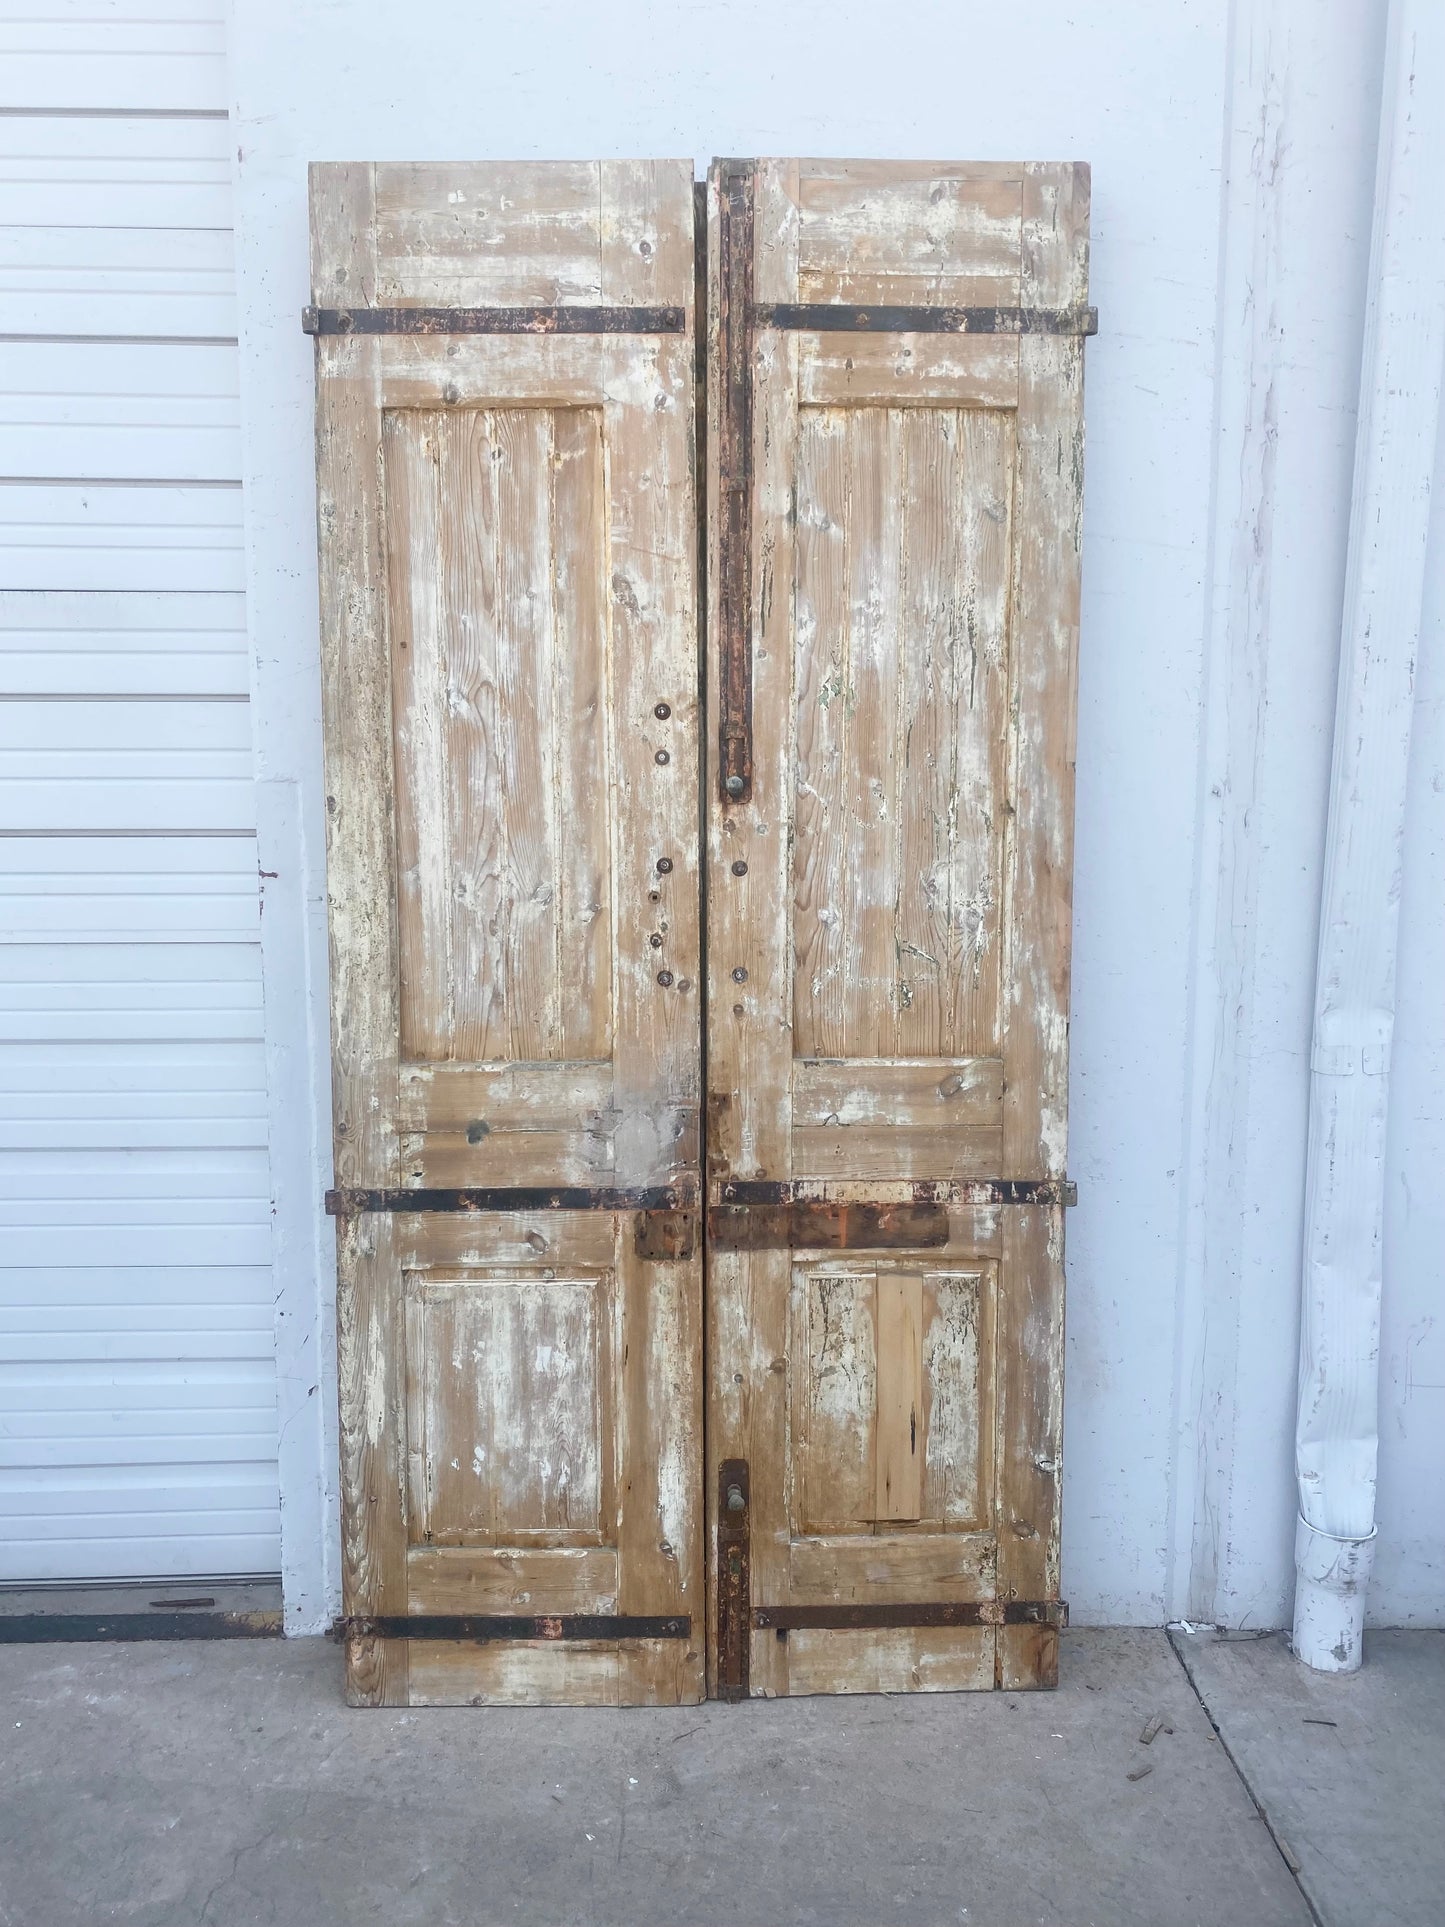 Pair of Ornate Antique Wood Carved Doors